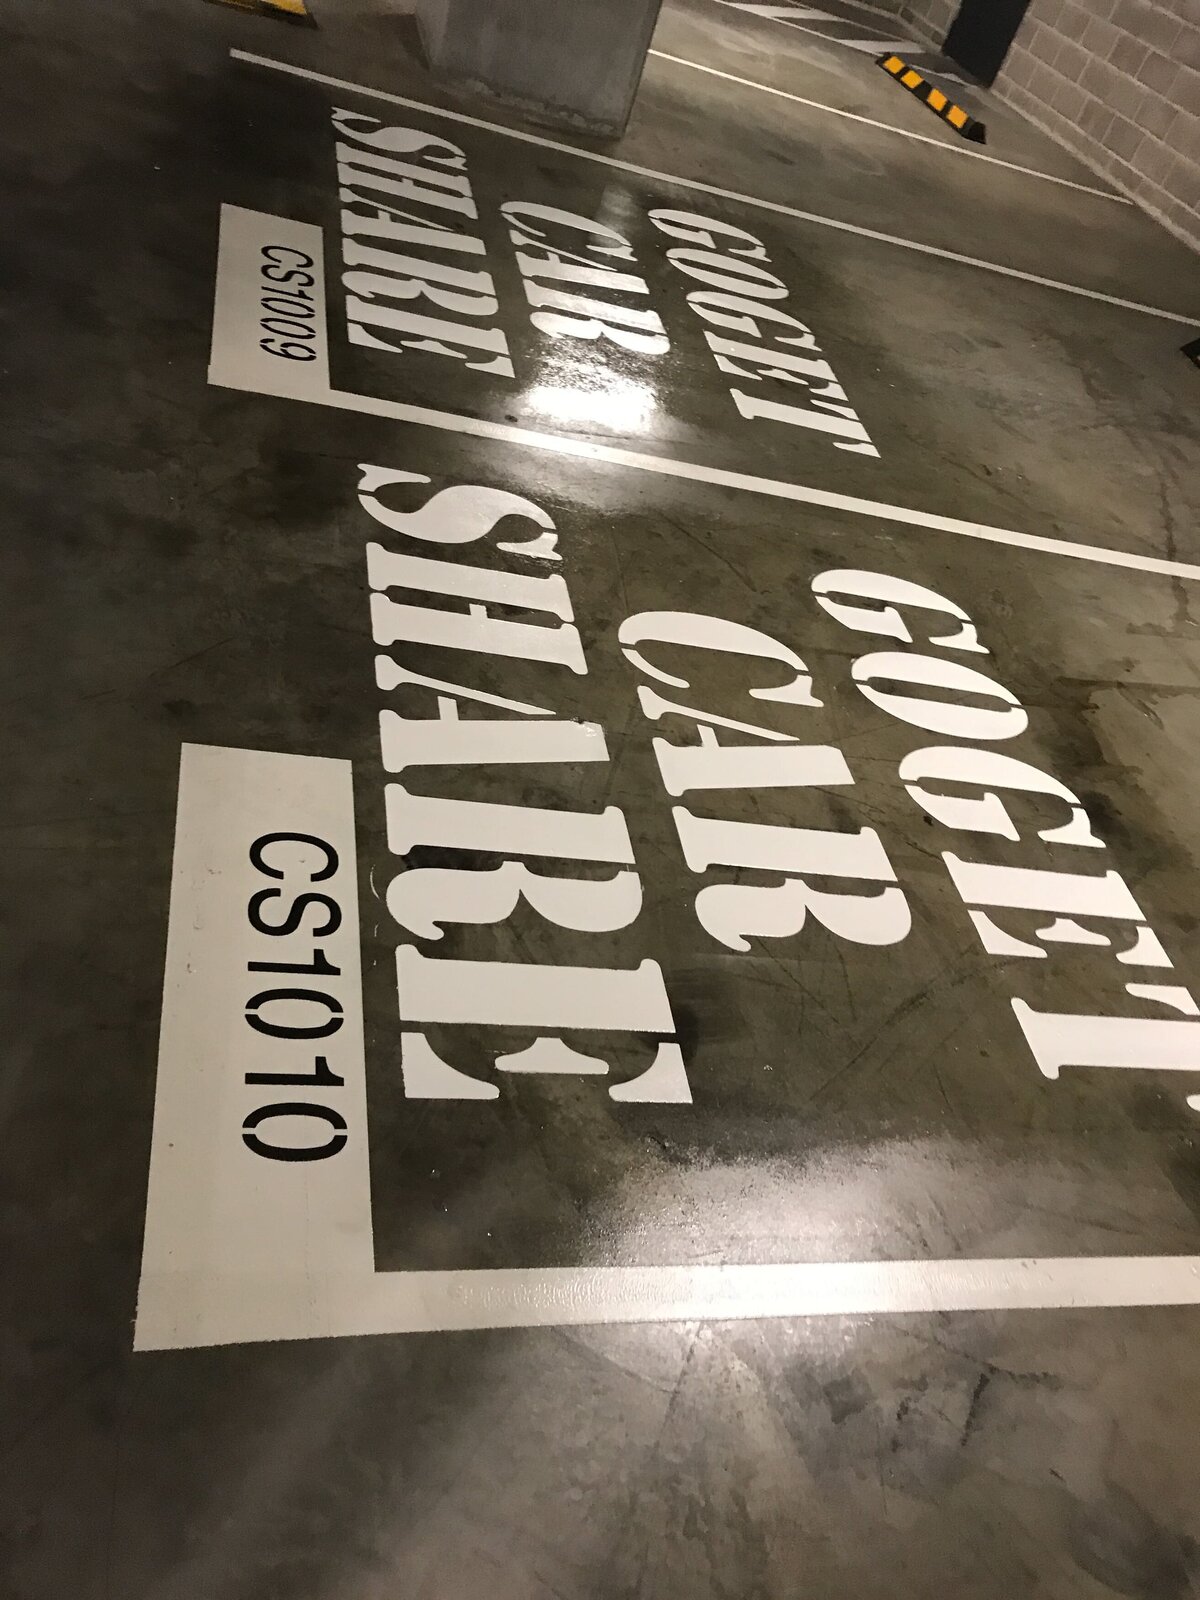 Line marking letters on concrete carpark floor "Goget Car Share"